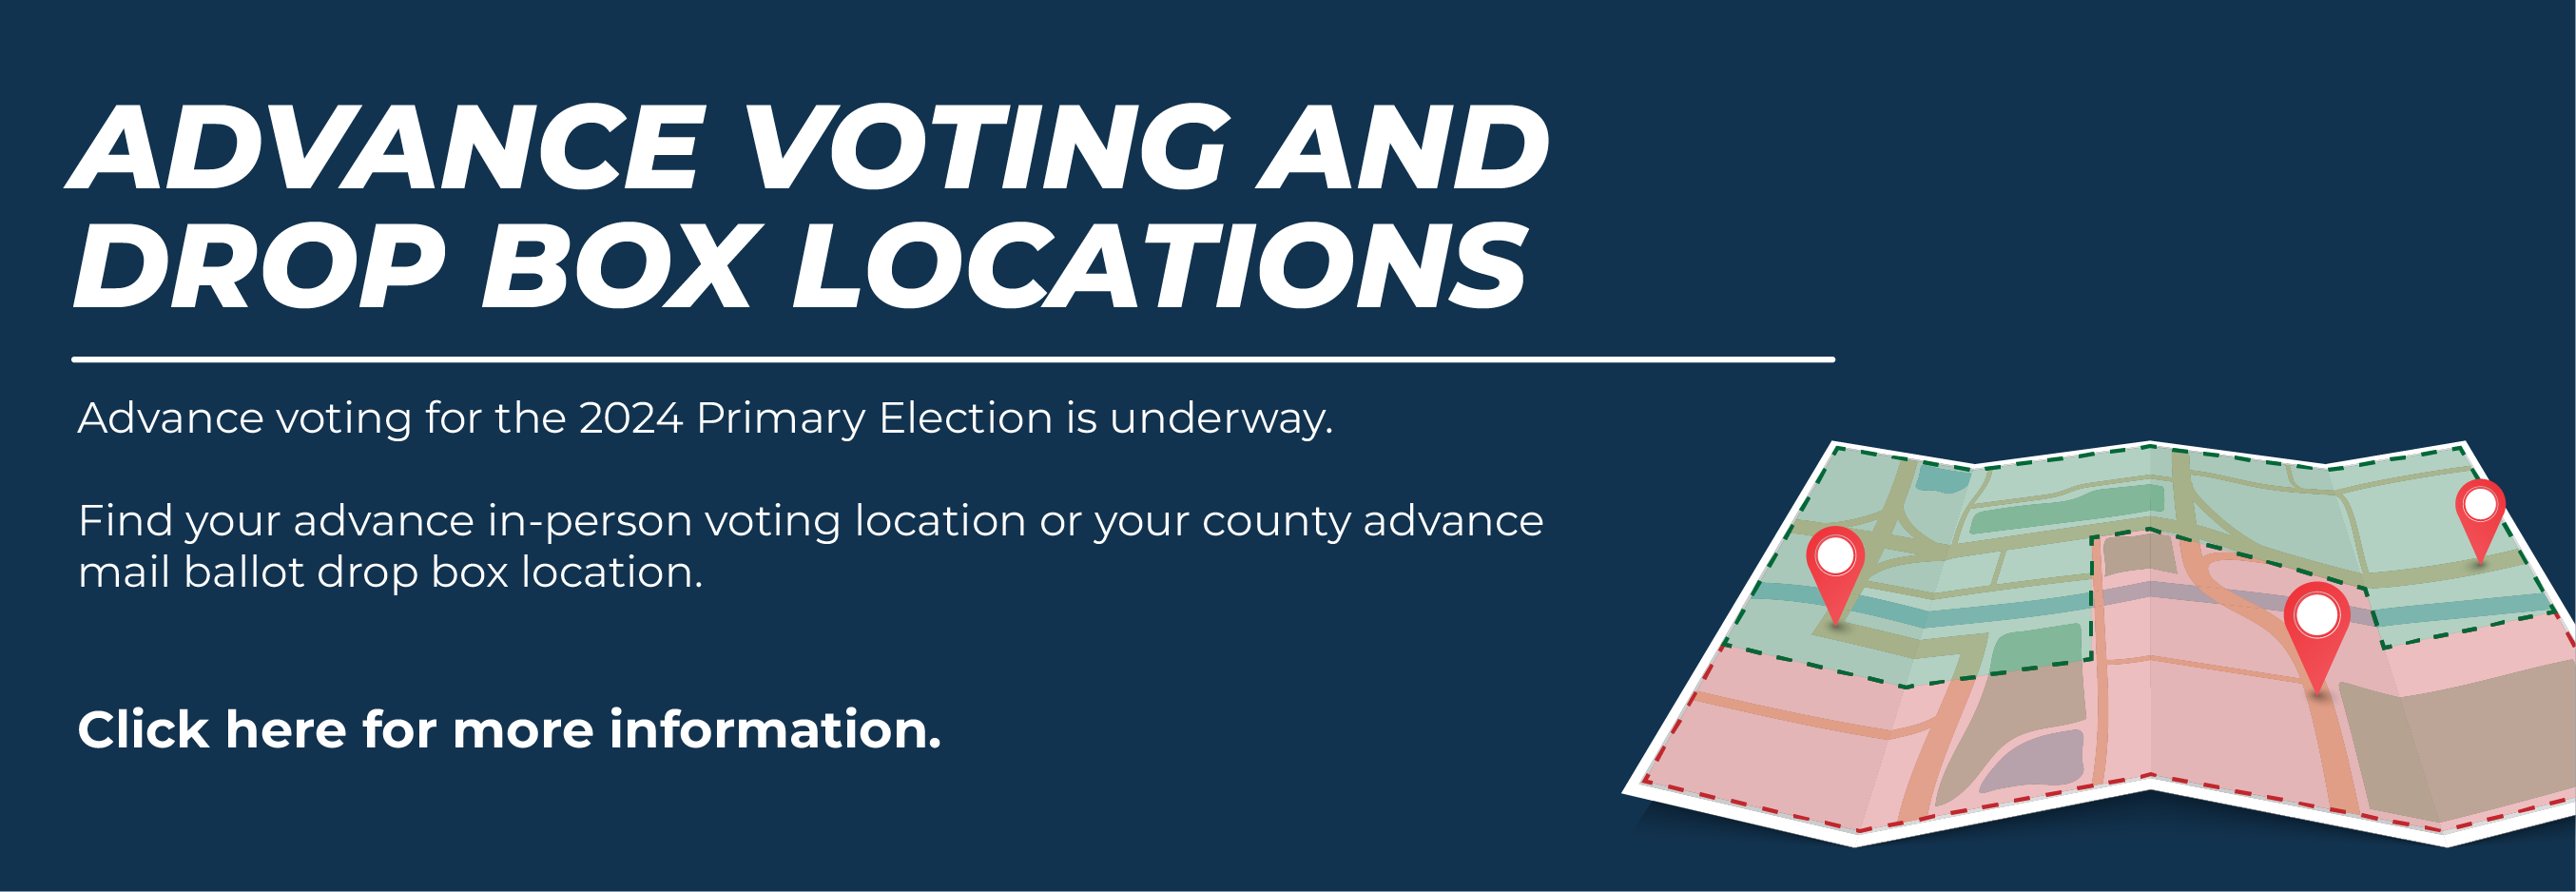 Advance Voting Locations image